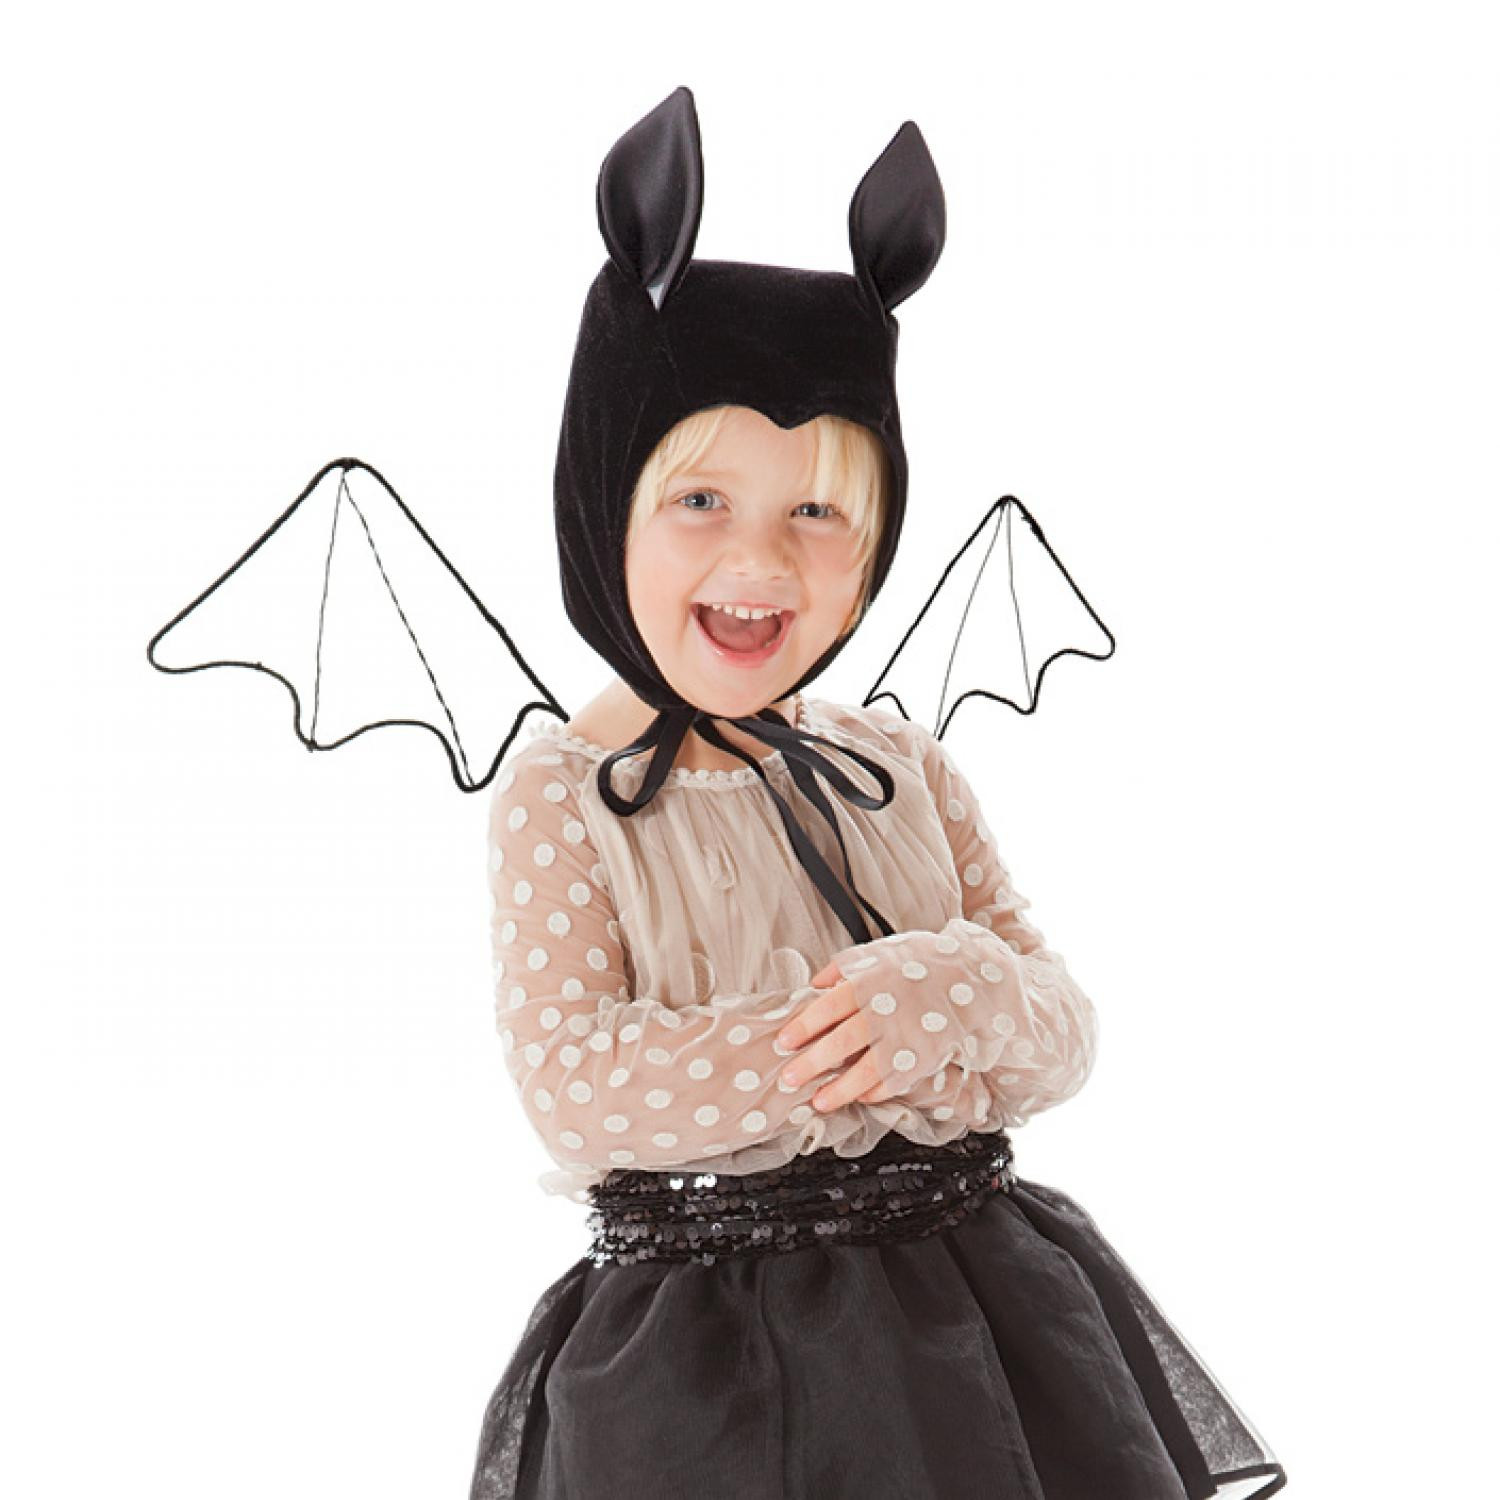 DIY Toddler Costumes
 DIY Kids Halloween Costumes